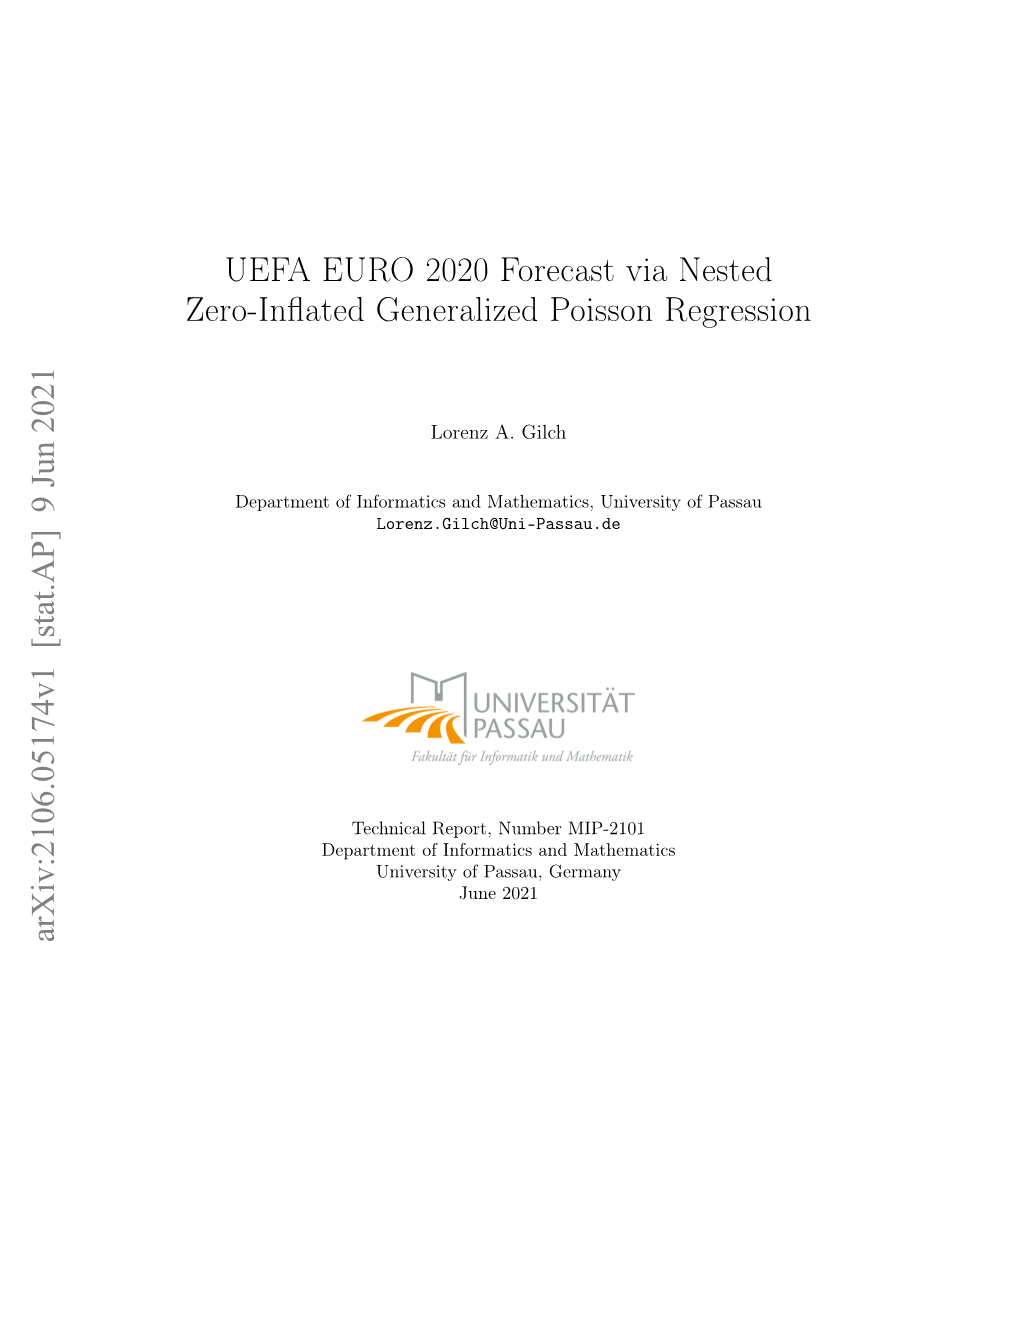 UEFA EURO 2020 Forecast Via Nested Zero-Inflated Generalized Poisson Regression Arxiv:2106.05174V1 [Stat.AP] 9 Jun 2021